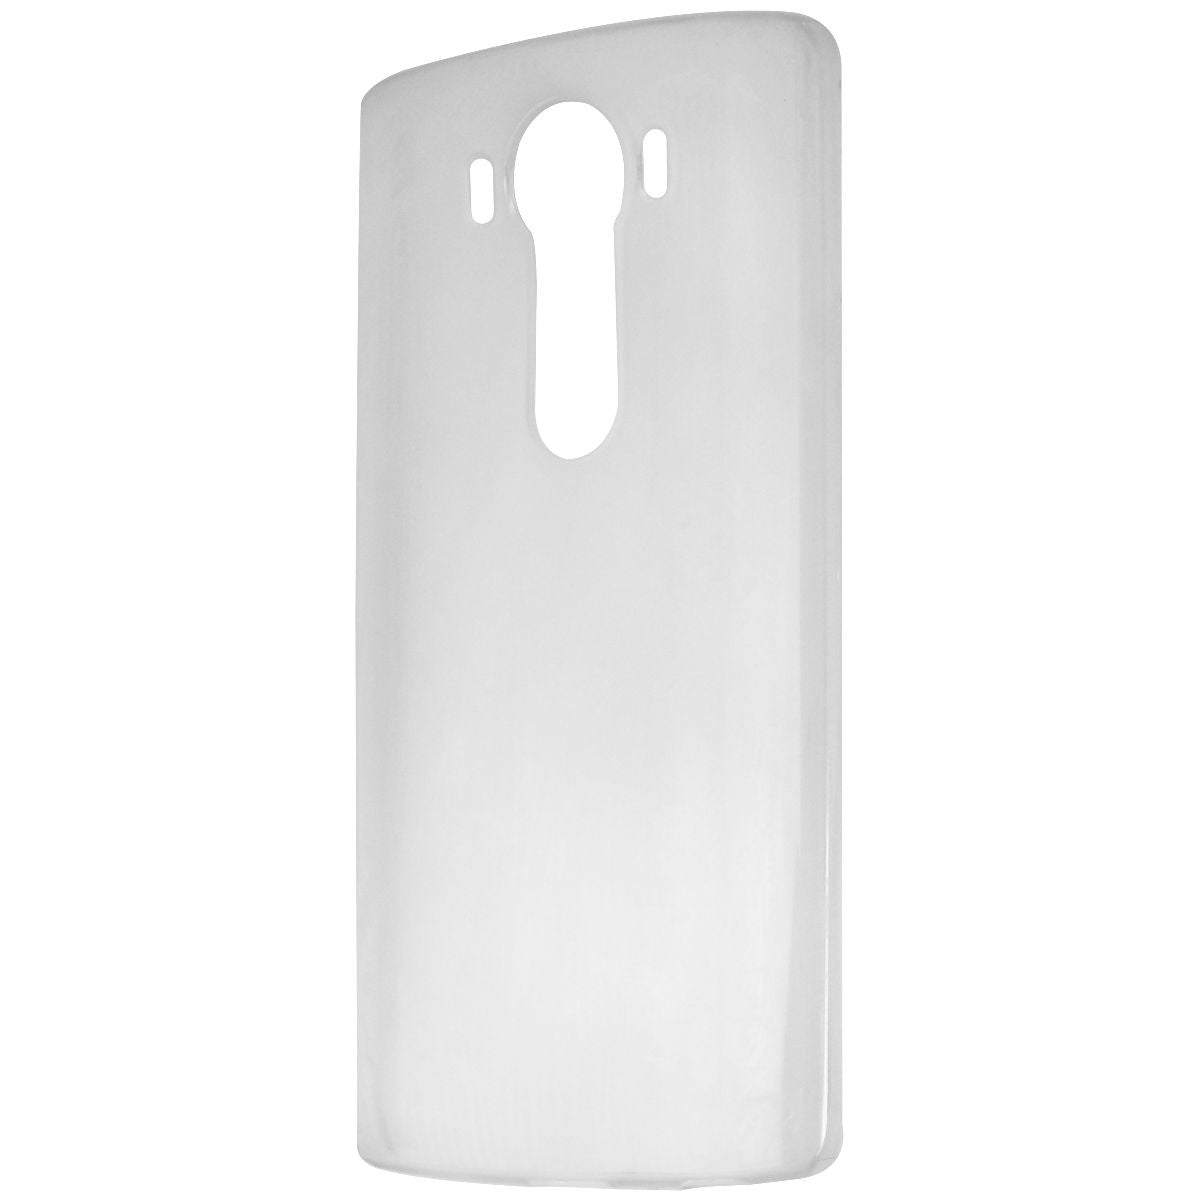 Spigen Liquid Crystal Series Flexible Case for LG V10 Smartphone - Clear Cell Phone - Cases, Covers & Skins Spigen    - Simple Cell Bulk Wholesale Pricing - USA Seller